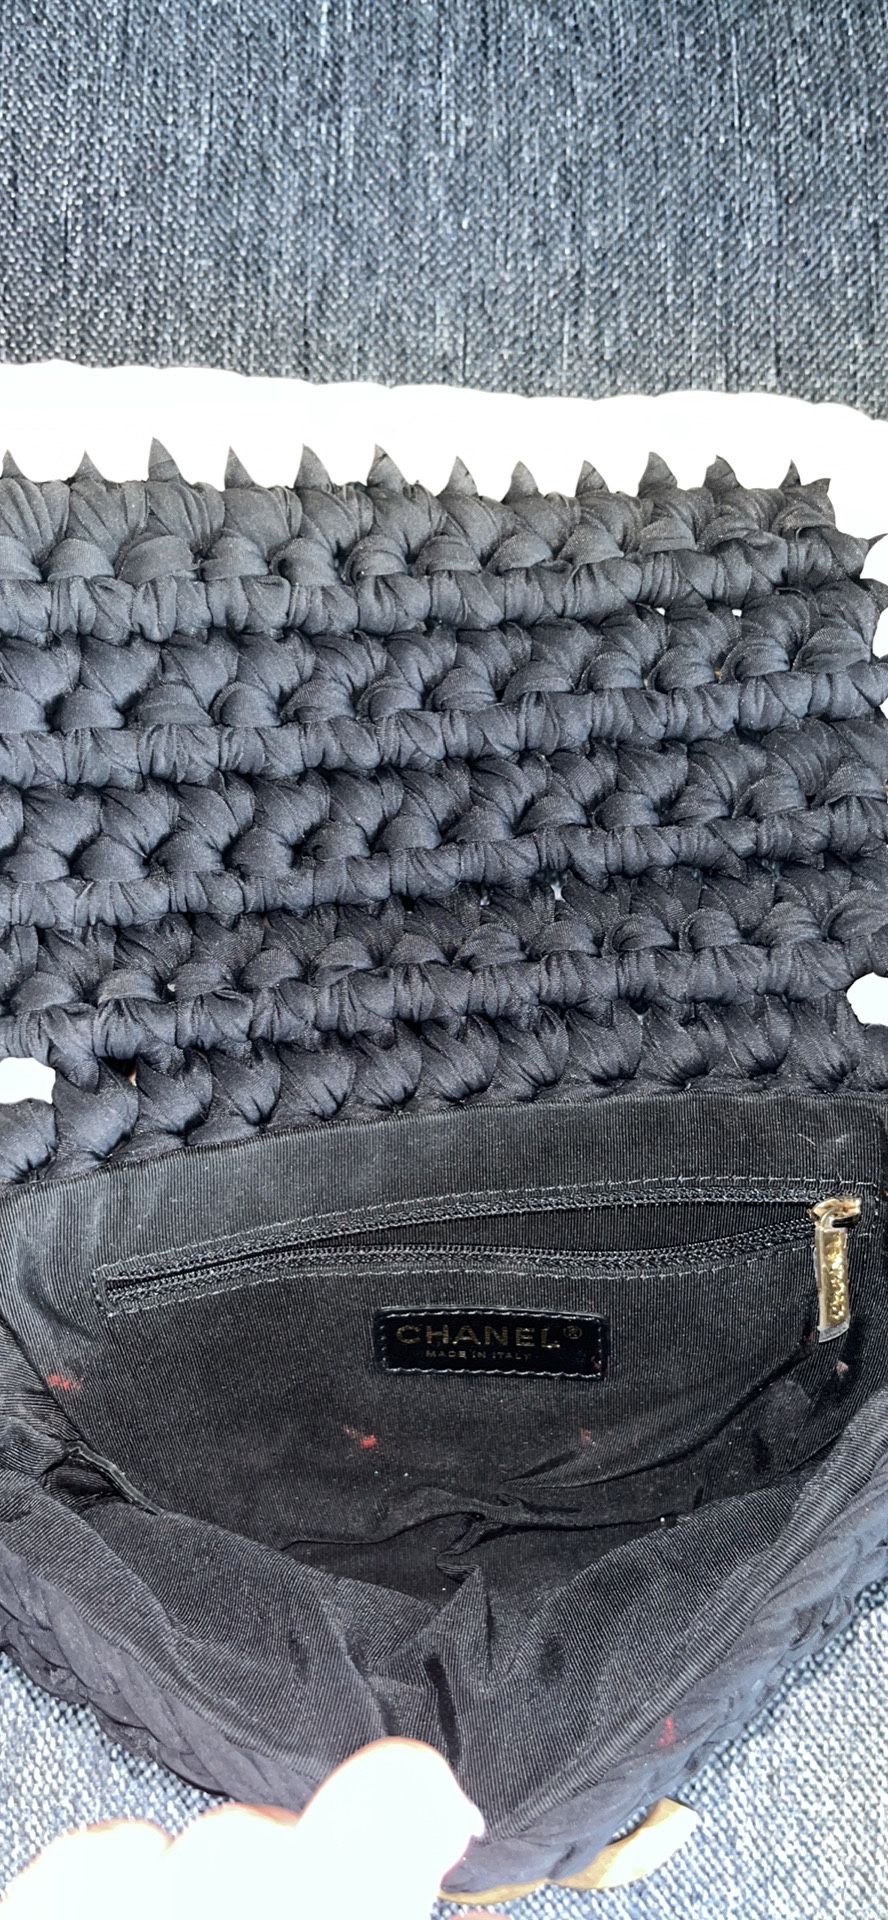 Authentic Chanel Fancy Crochet Bag 